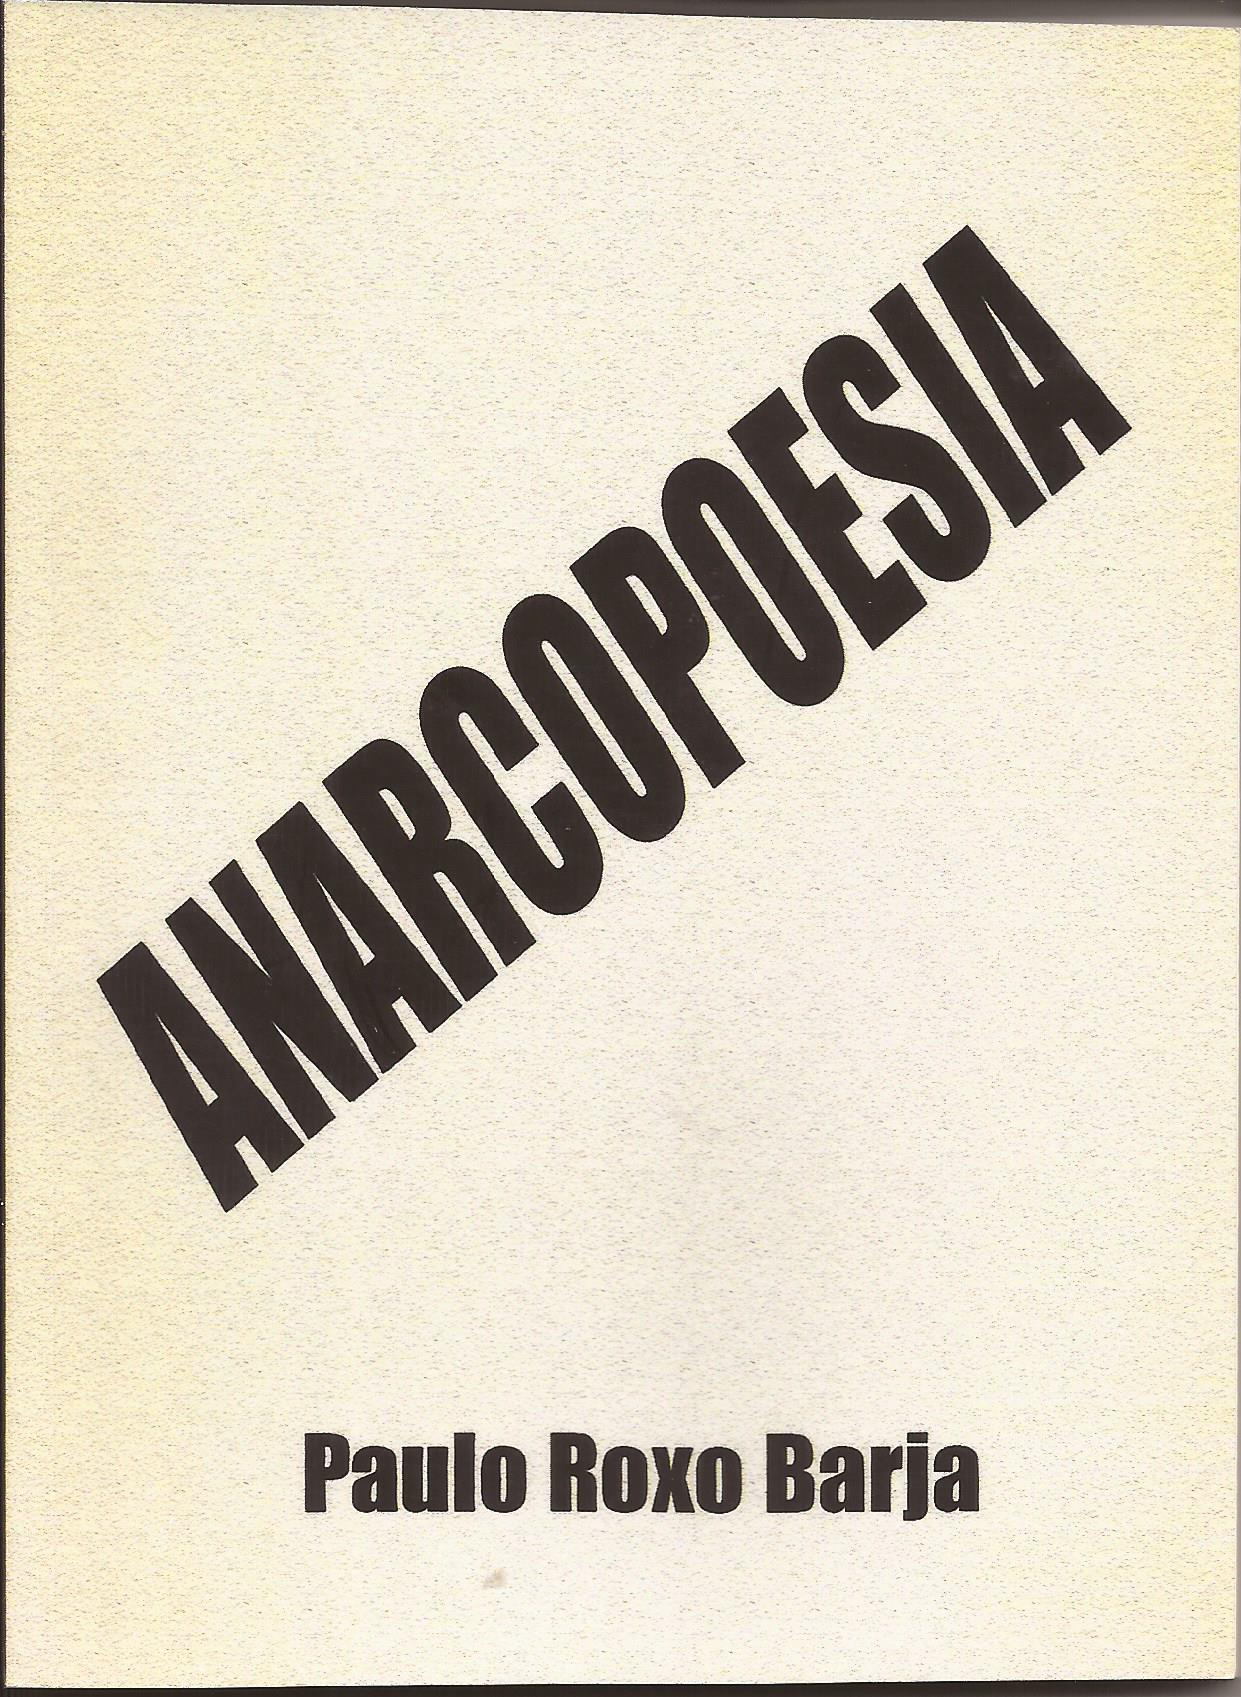 Anarcopoesia